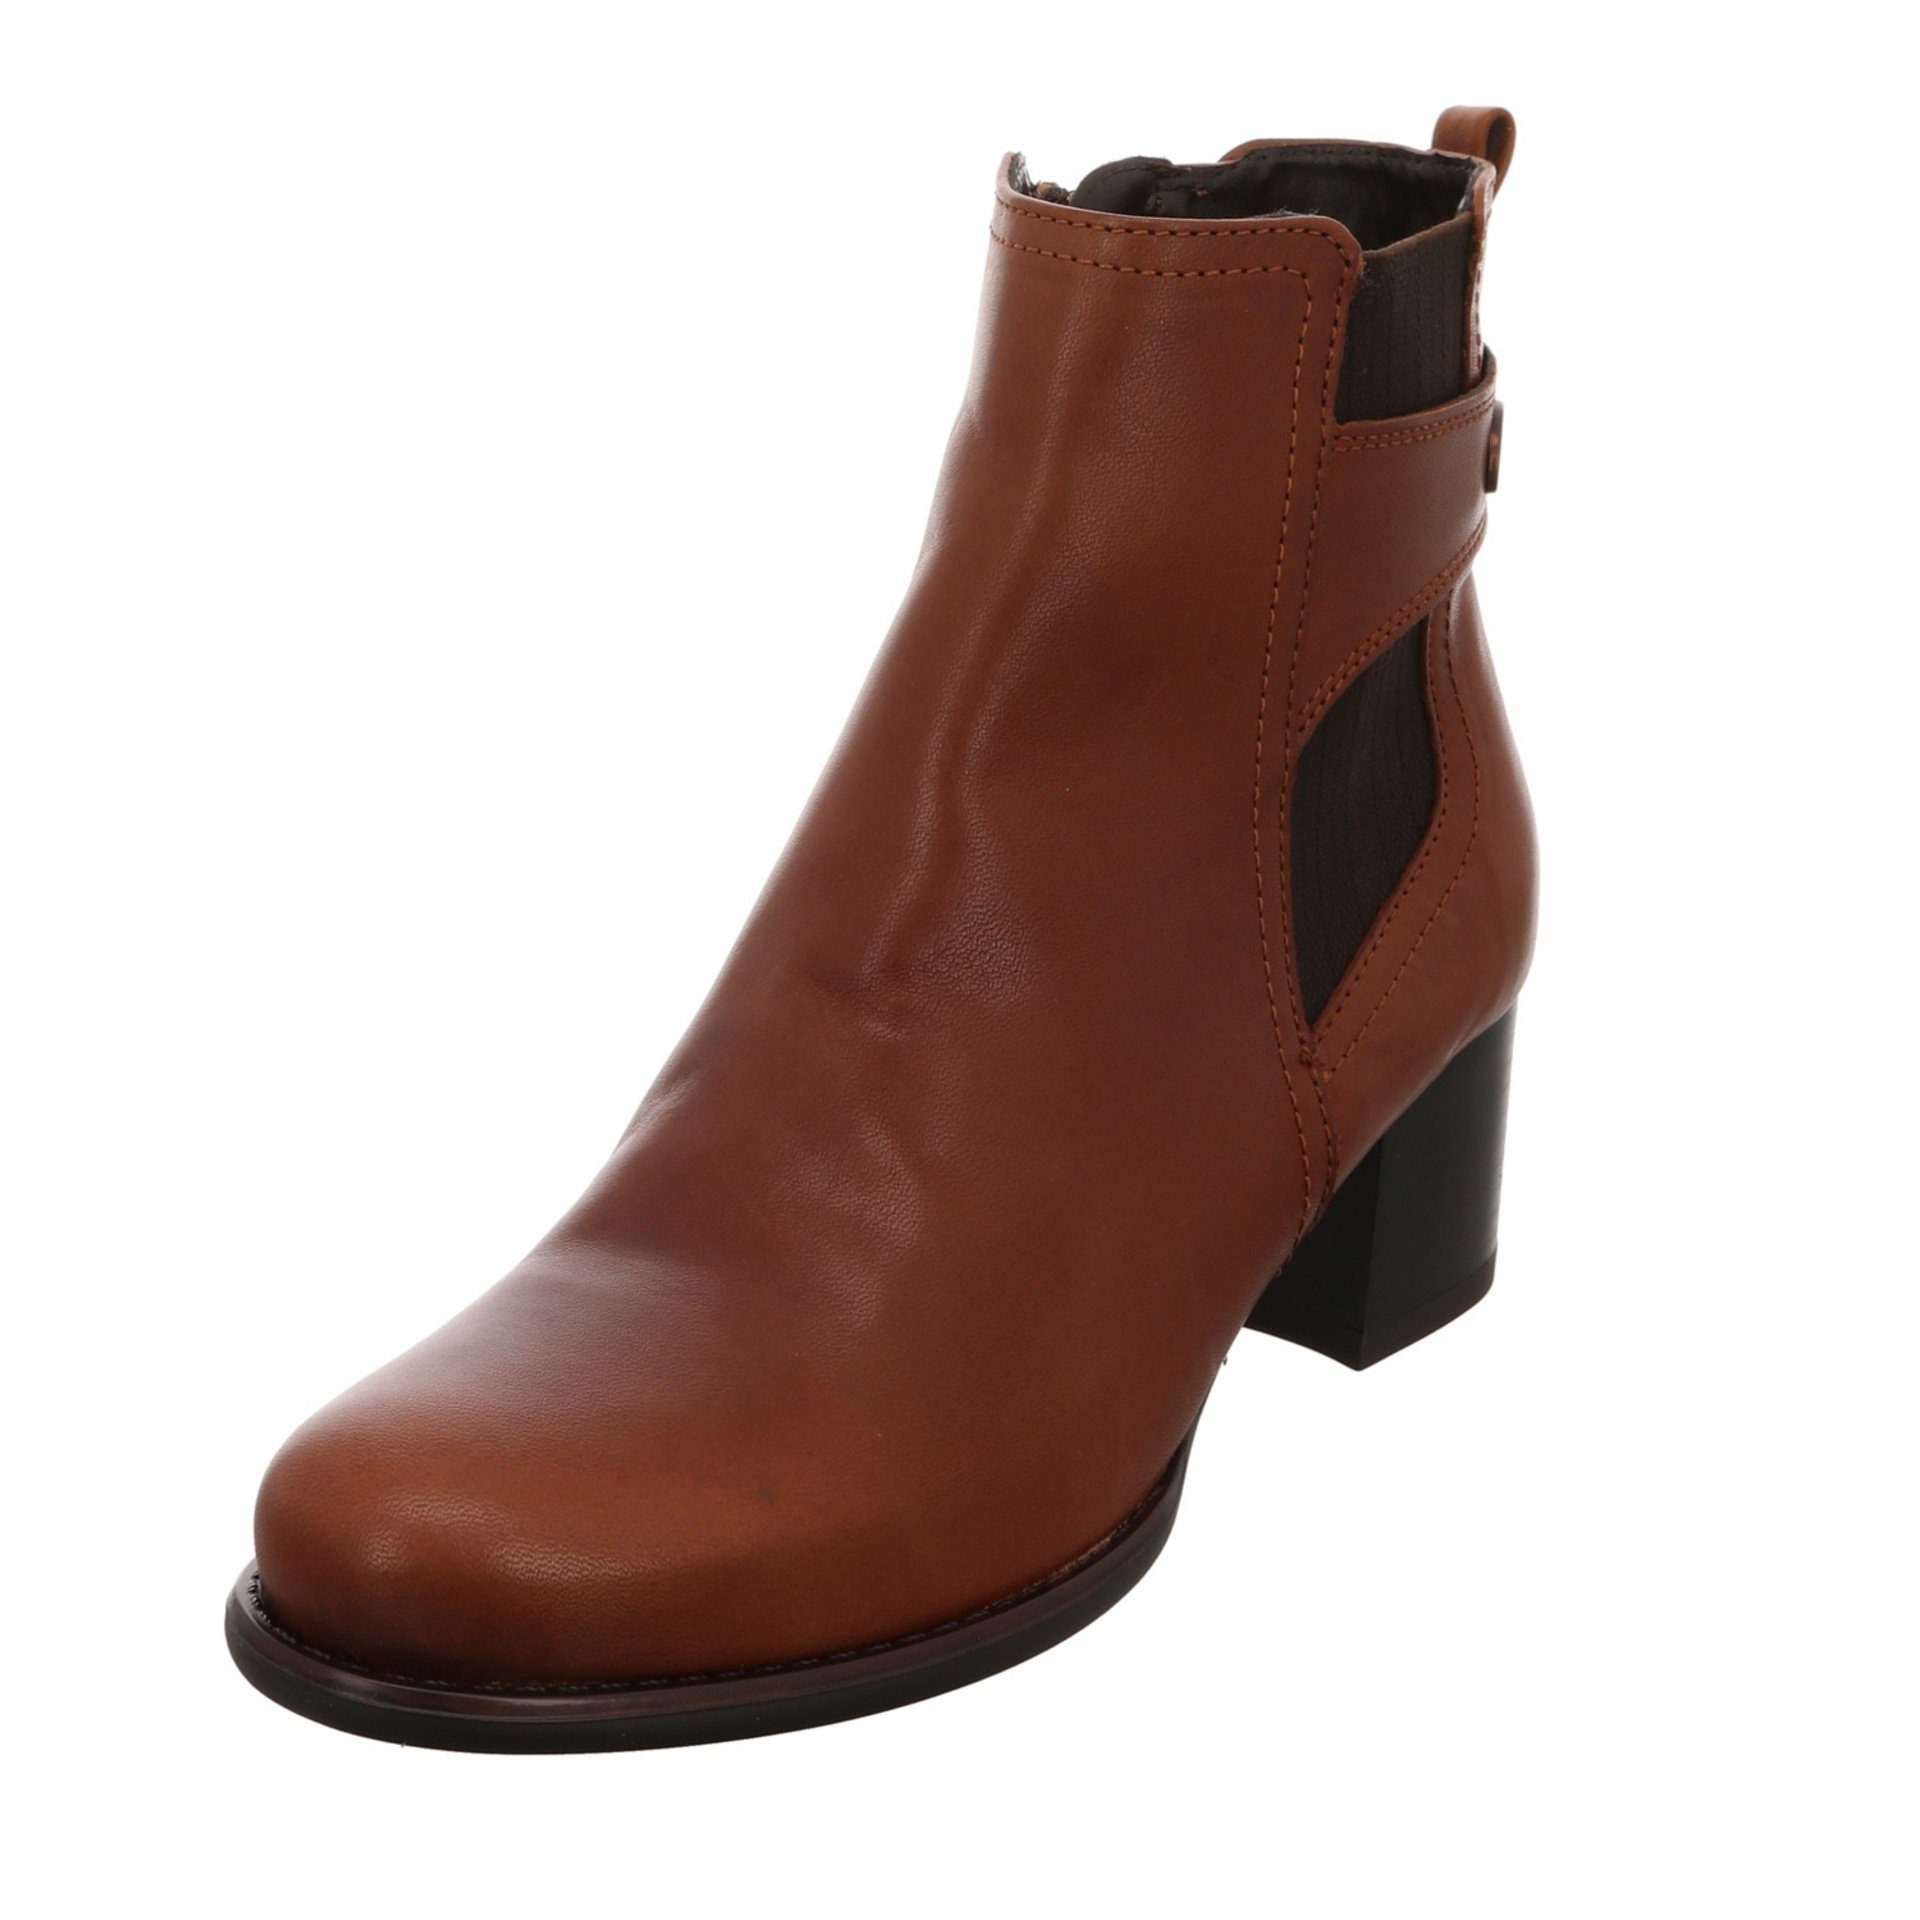 Ara Damen Stiefeletten Schuhe Luca Chelsea Boots Stiefelette Leder-/Textilkombination braun 046613